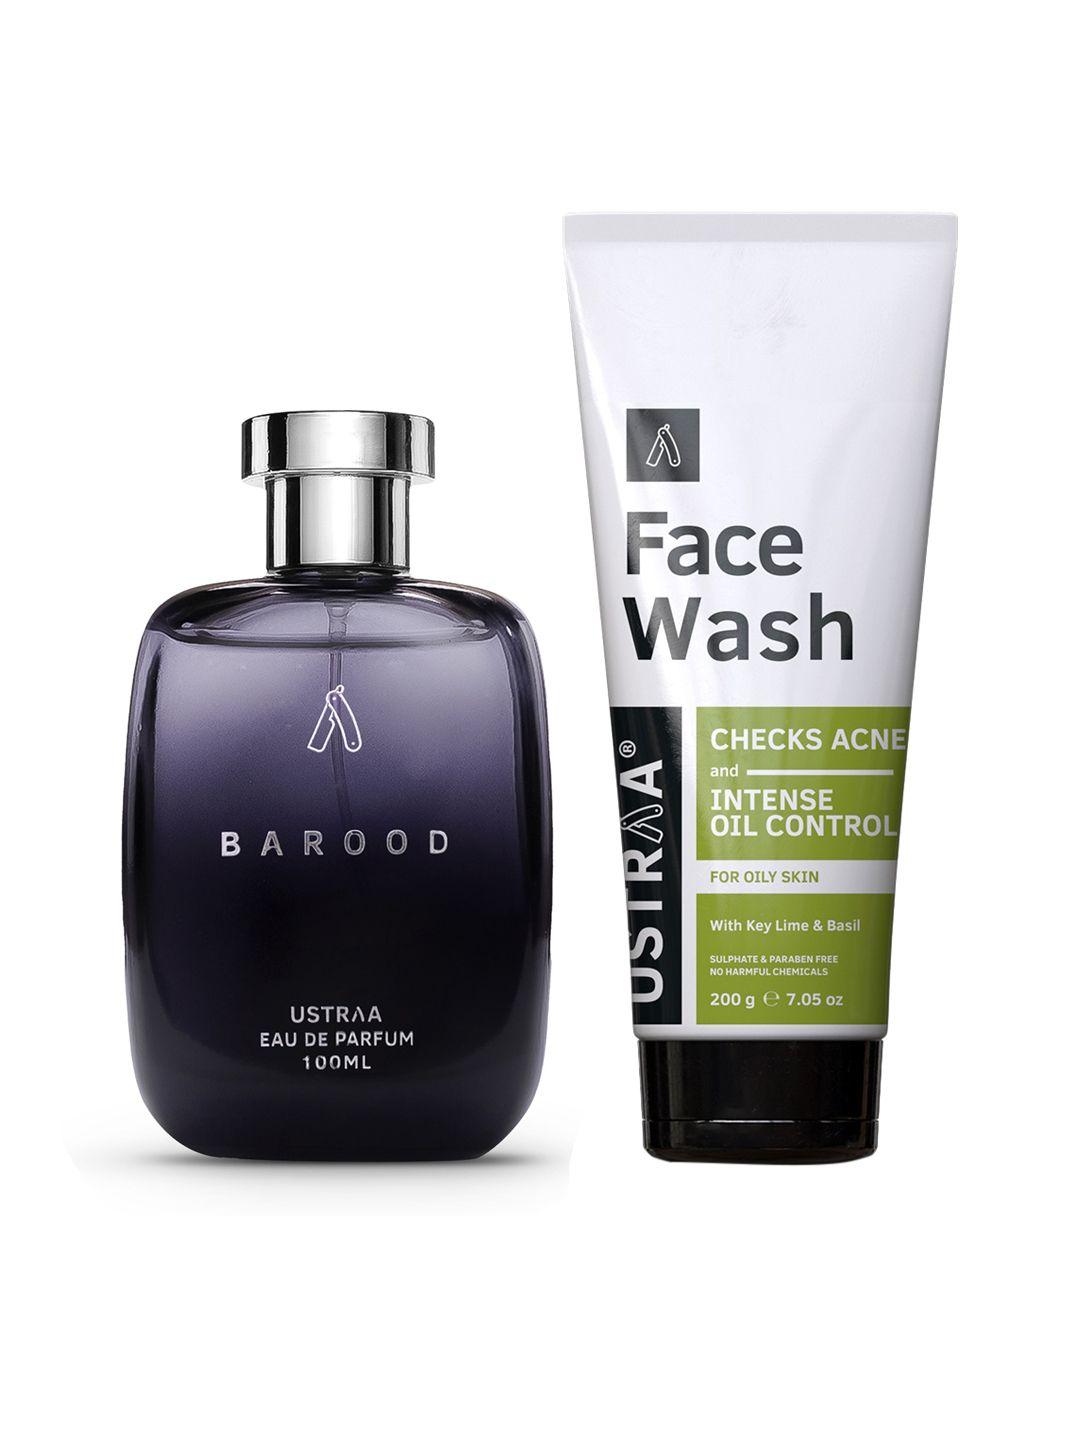 ustraa men set of barood eau de parfum 100 ml + acne & oil control face wash 200 g